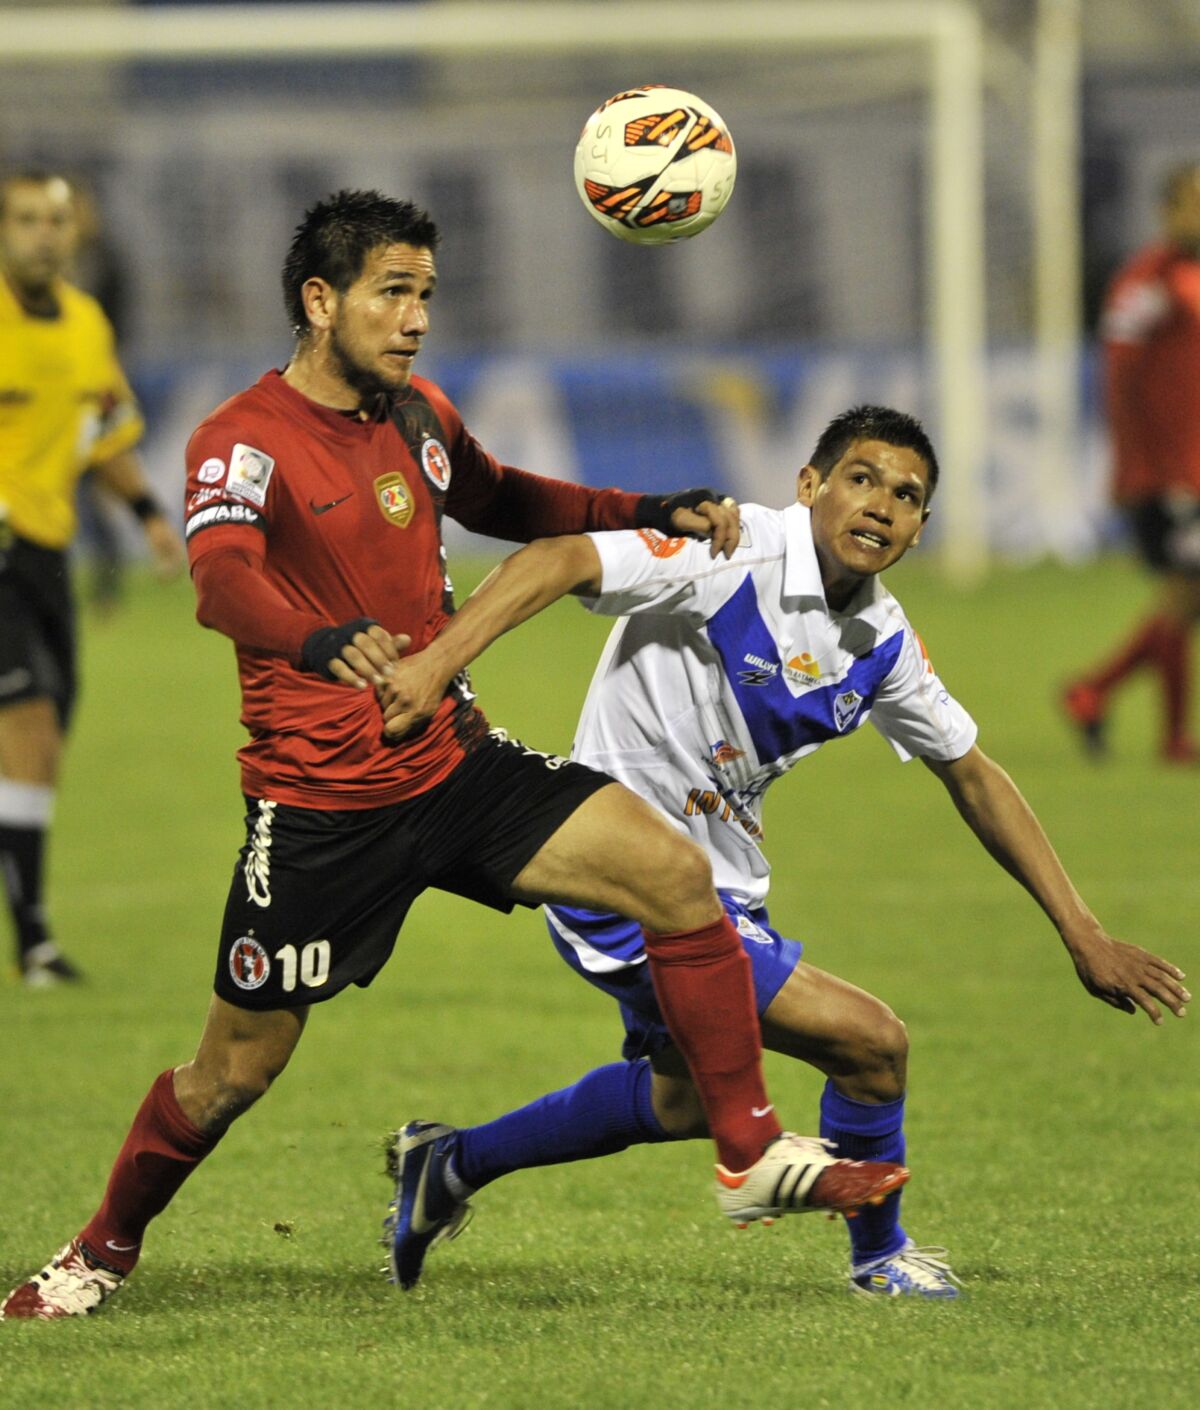 Club Tijuana's Raul Enriquez vies for the ball with Anibal Torrico of Bolivia's San Jose during 2013 Copa Libertadores match